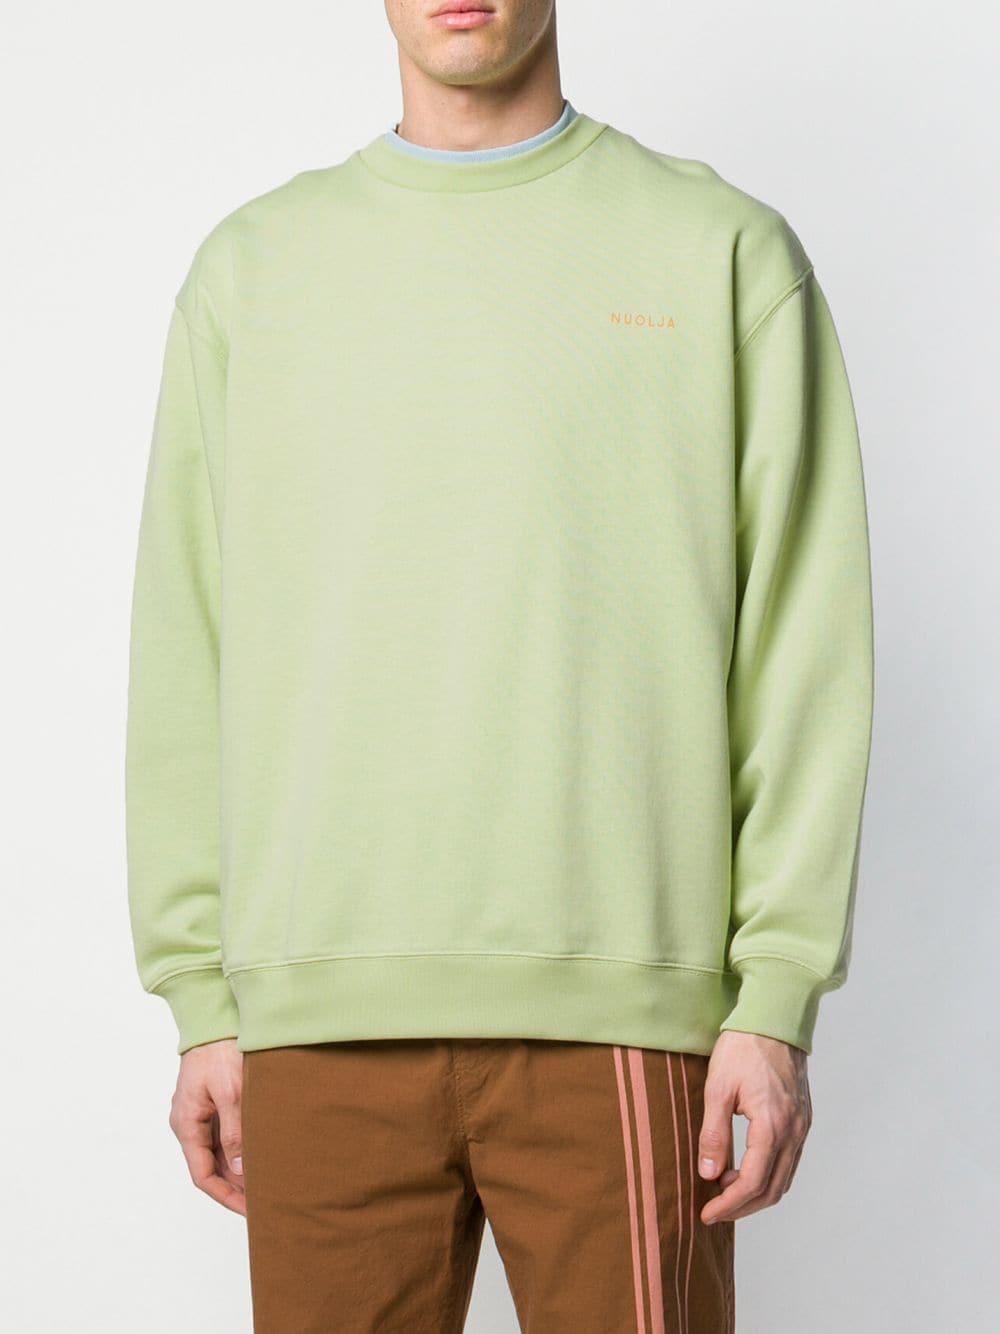 Acne Studios Cotton Printed Crew Neck Sweatshirt in Green for Men - Lyst